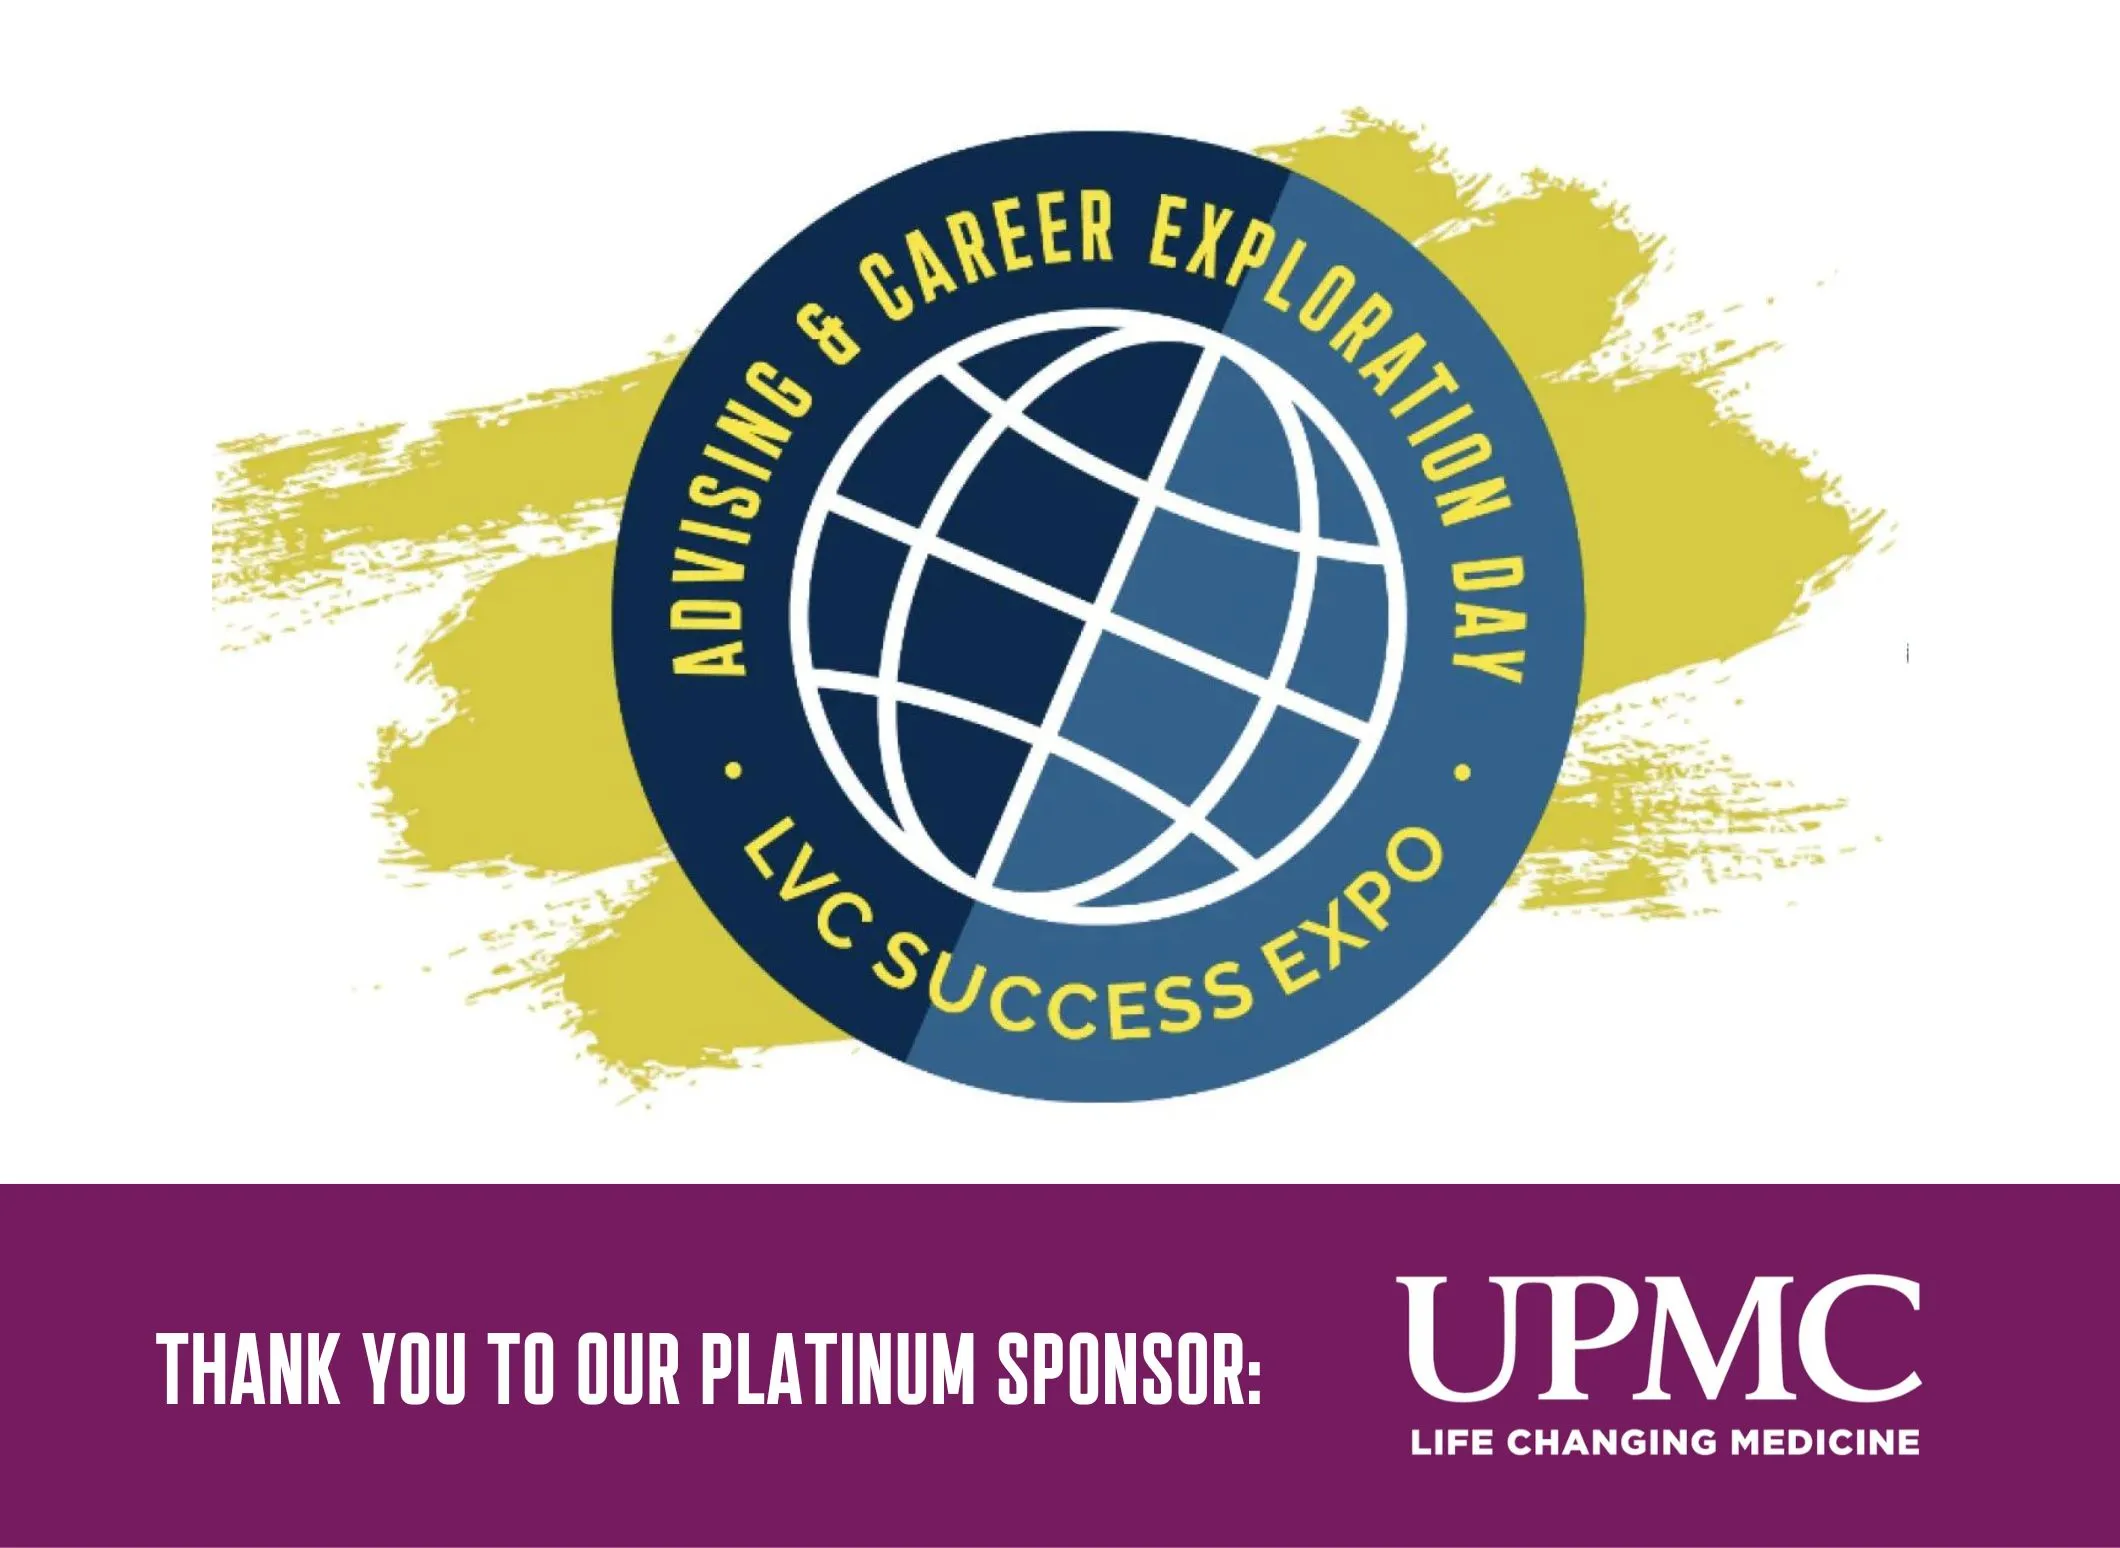 LVC Success Expo event logo with UPMC sponsor logo